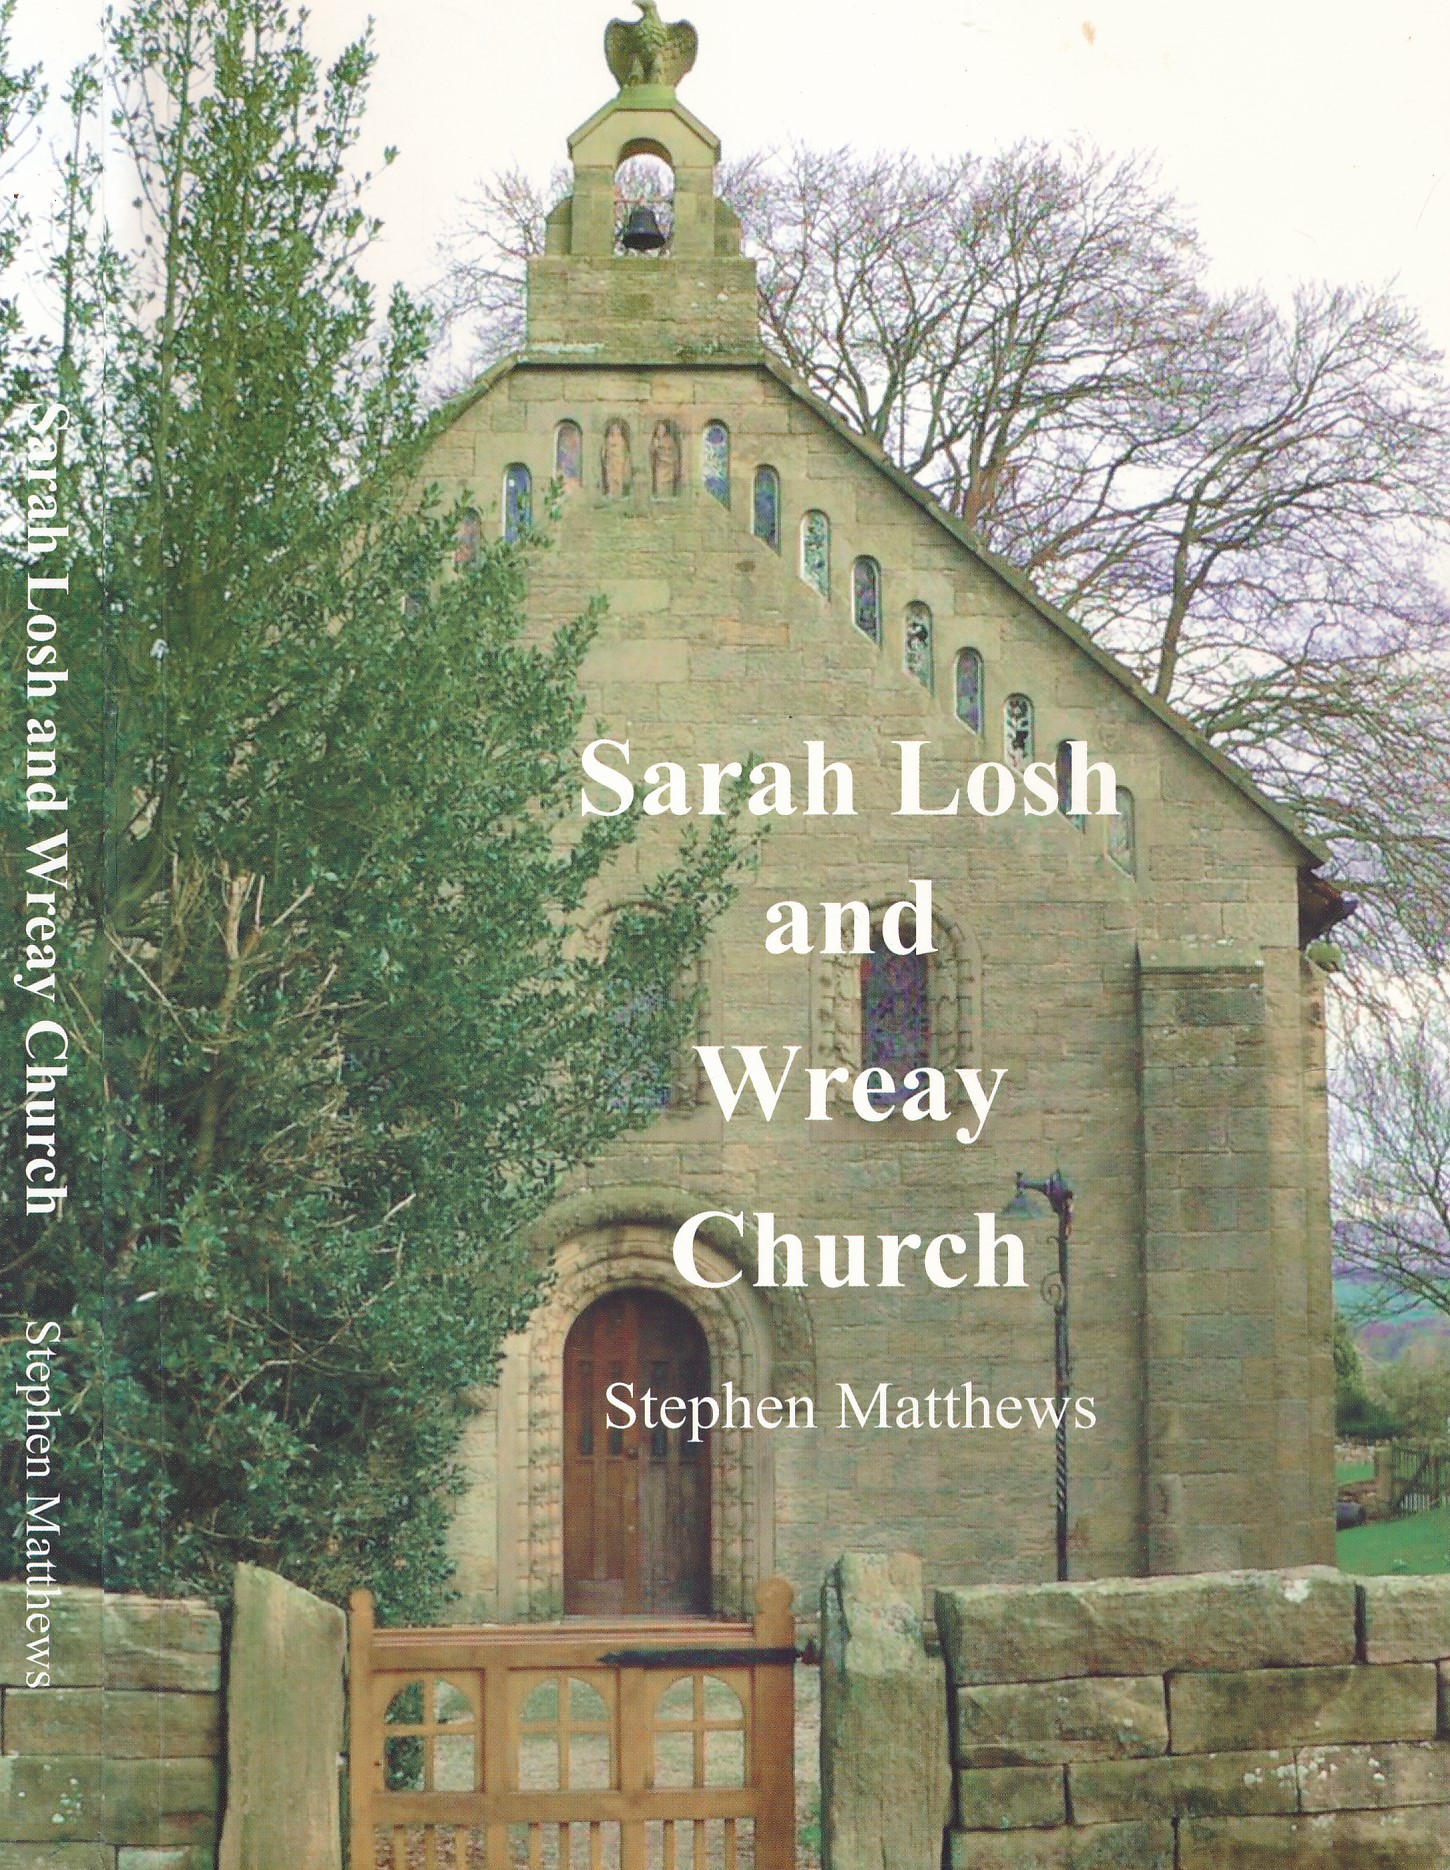 Sarah Losh and Wreay Church